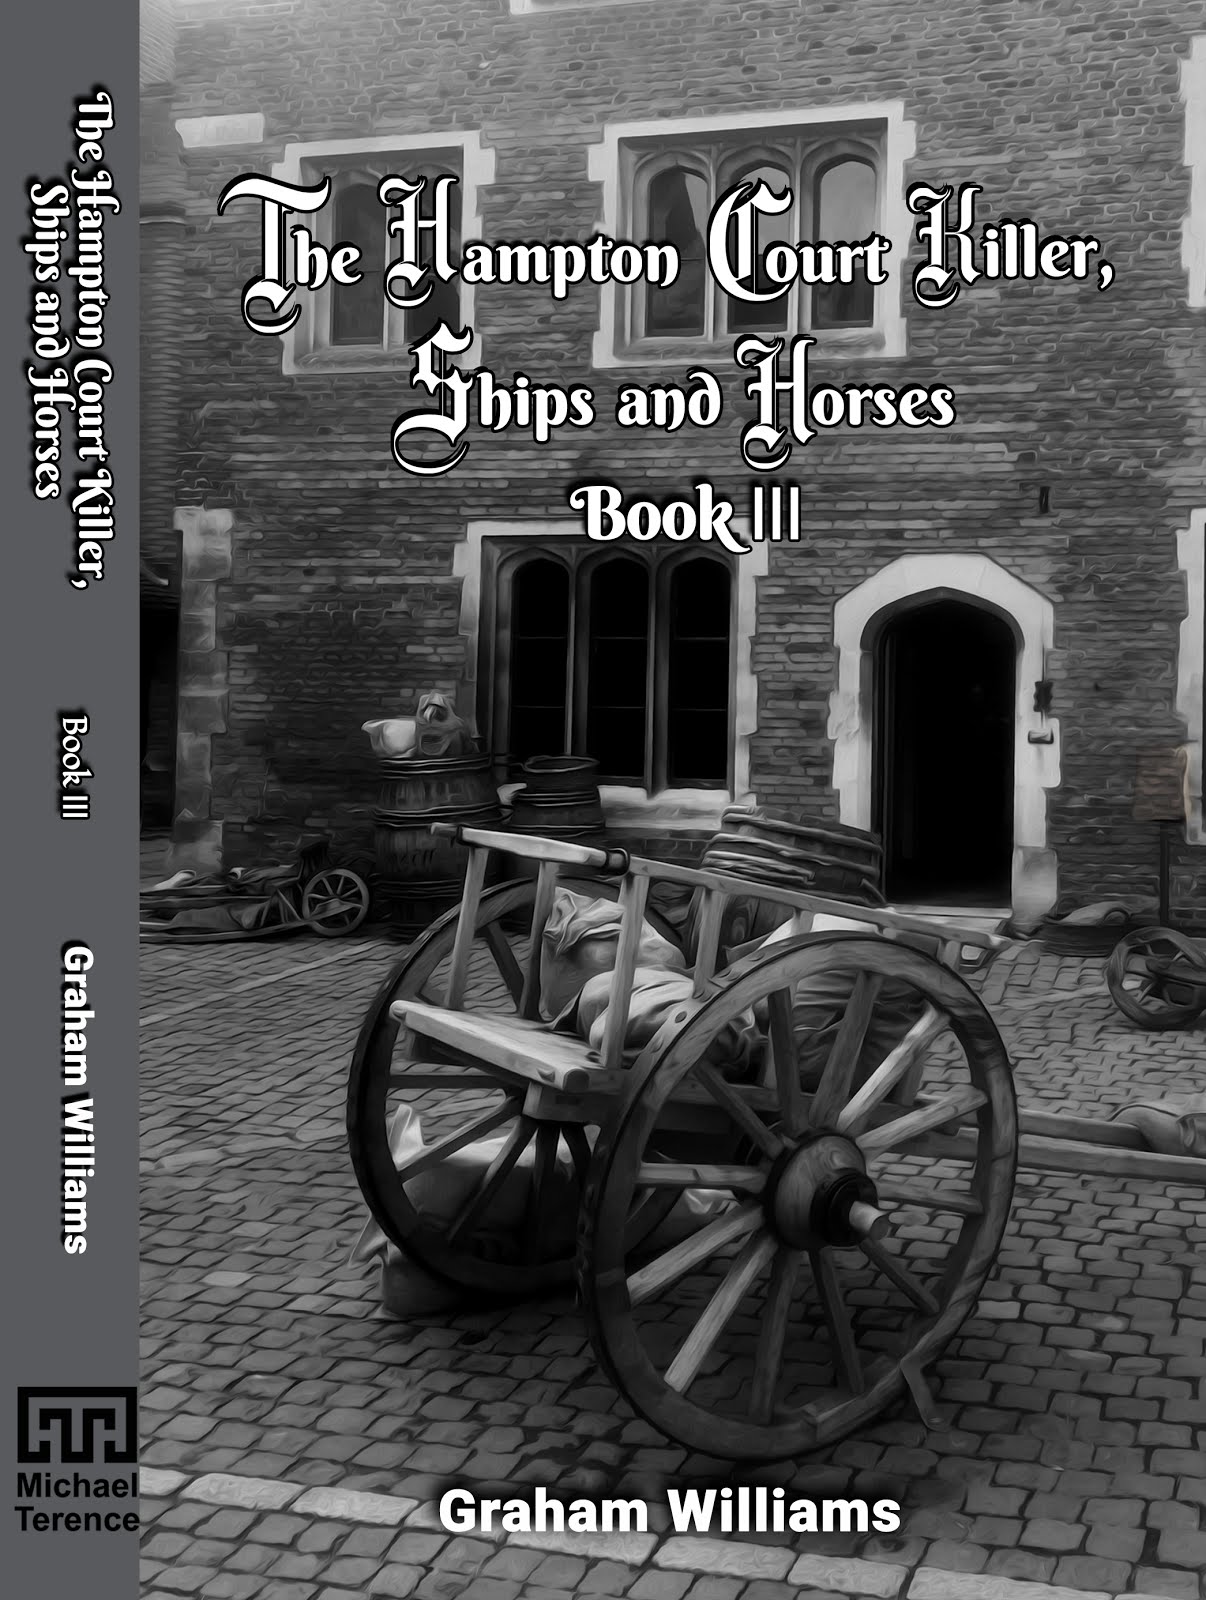 THE HAMPTON COURT KILLER, SHIPS AND HORSES